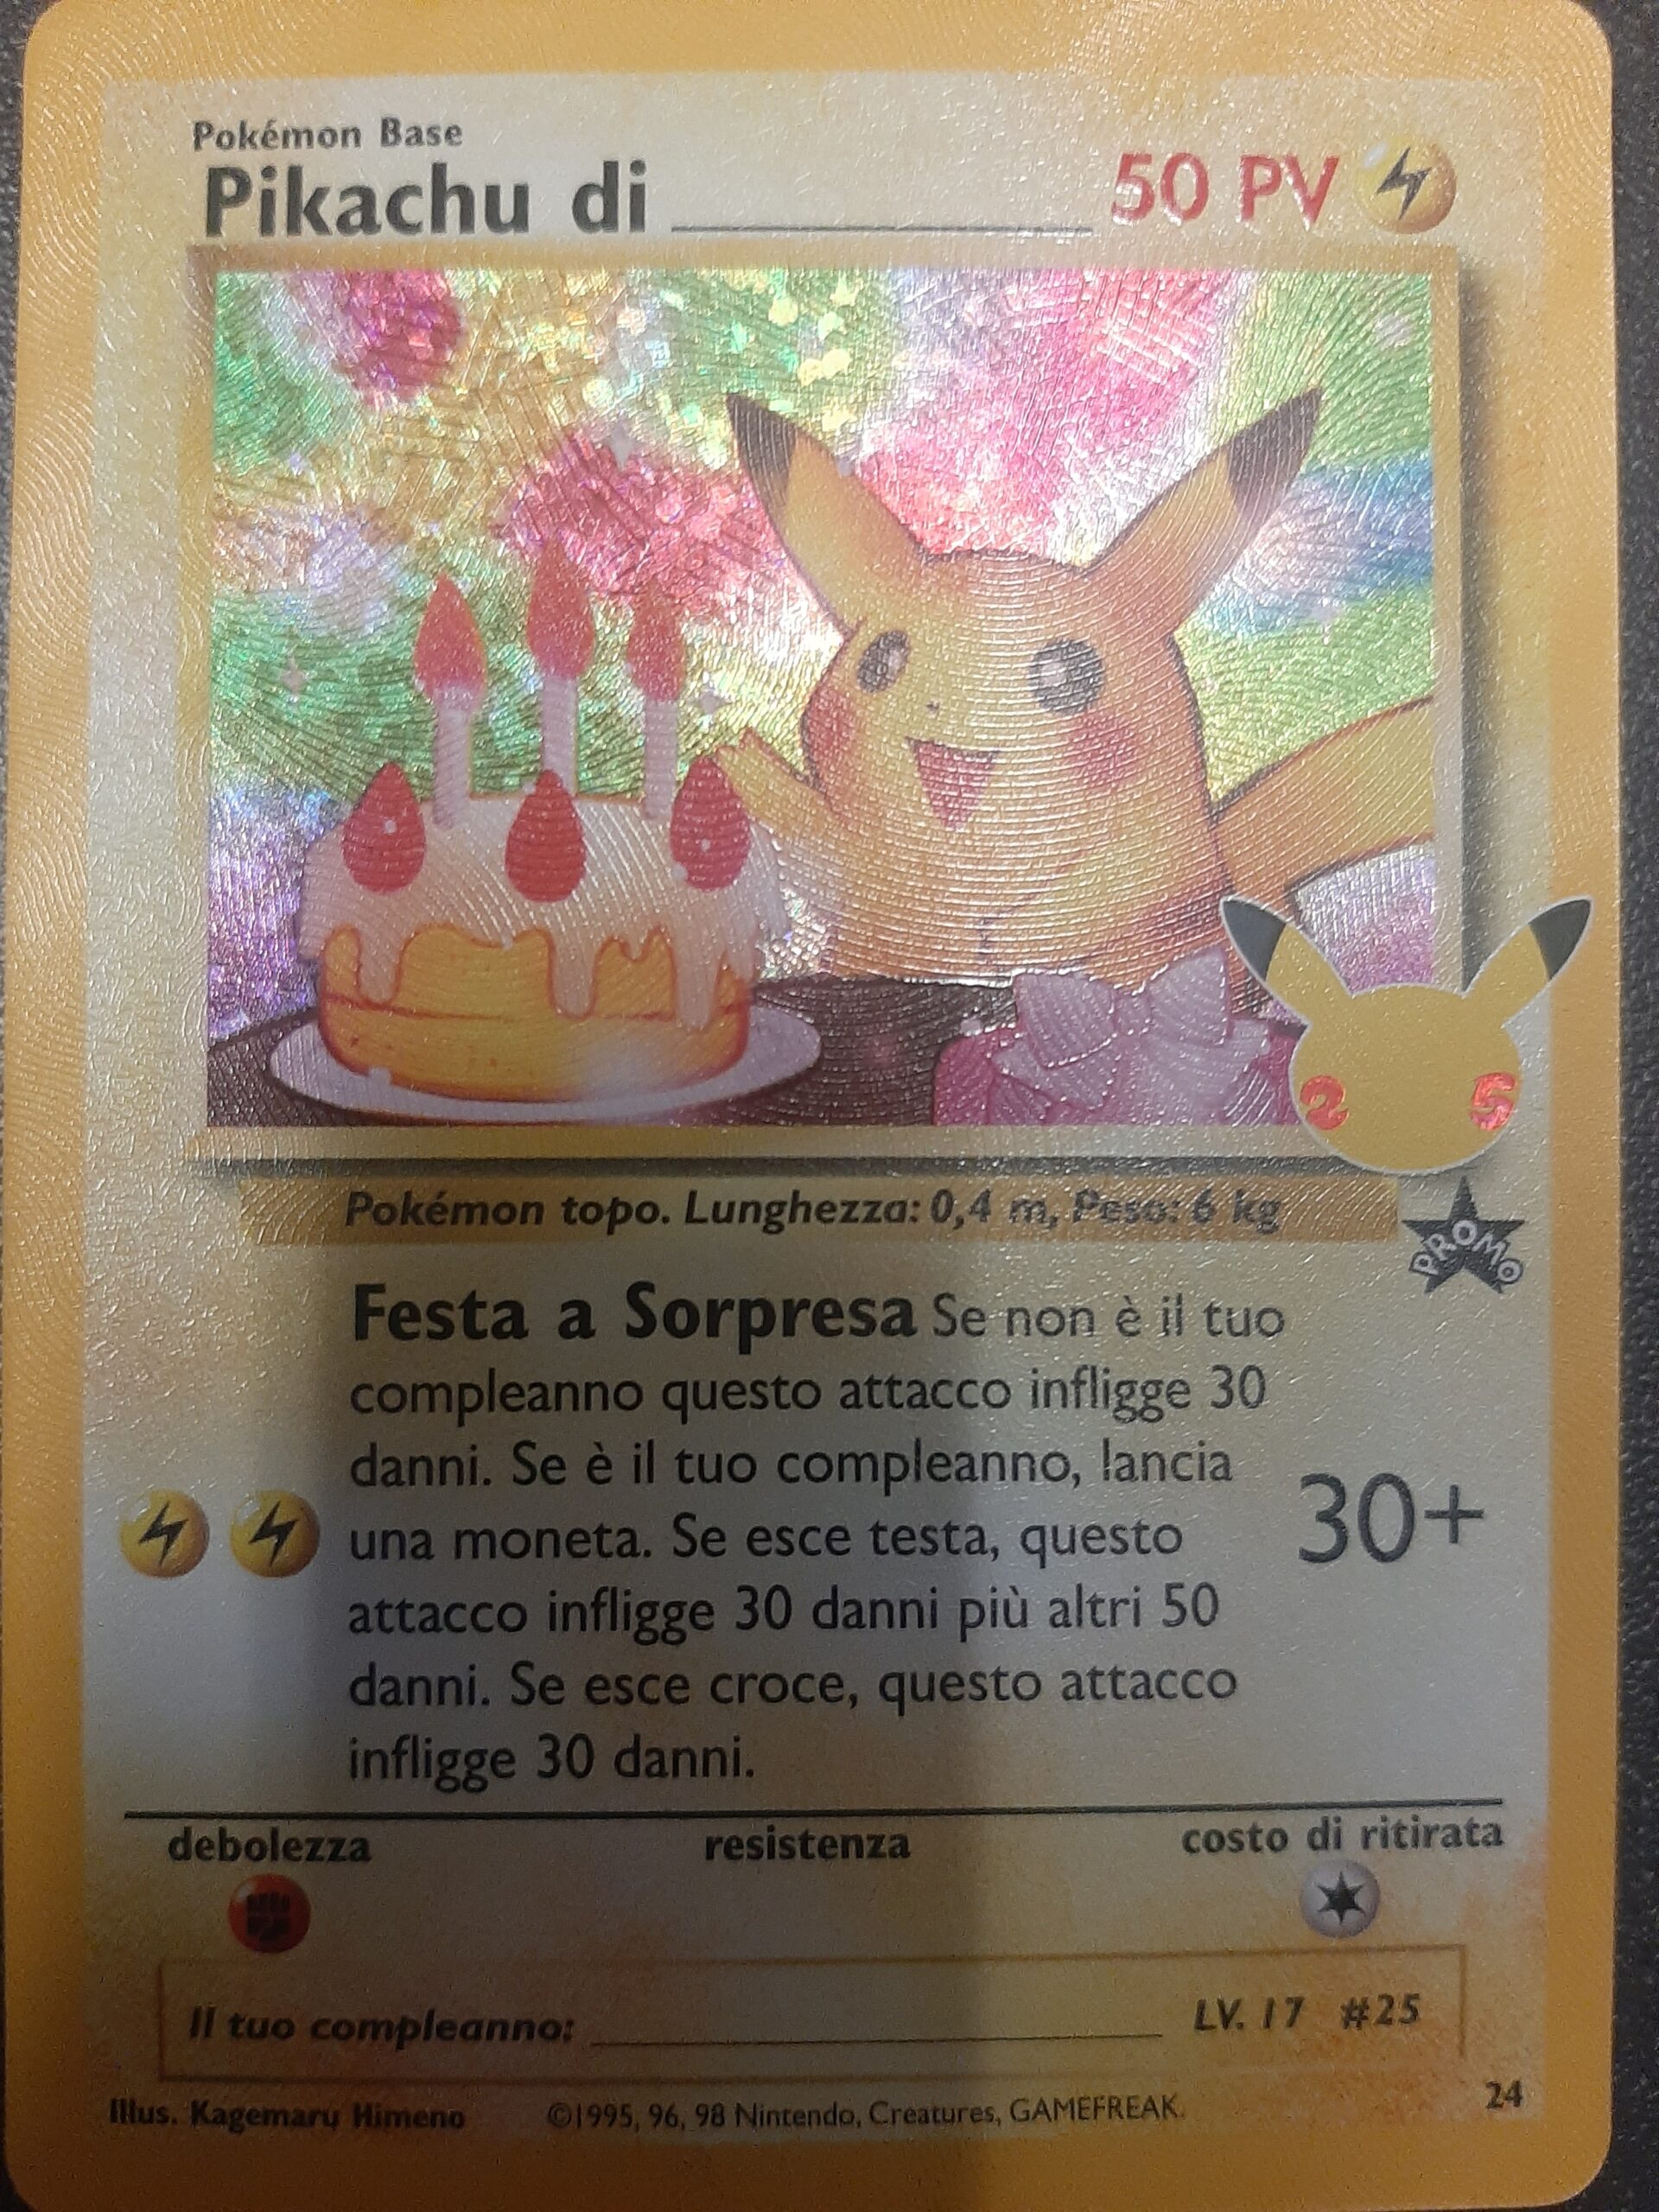 Carta Pokémon Pikachu di ________ compleanno - Gran festa 24